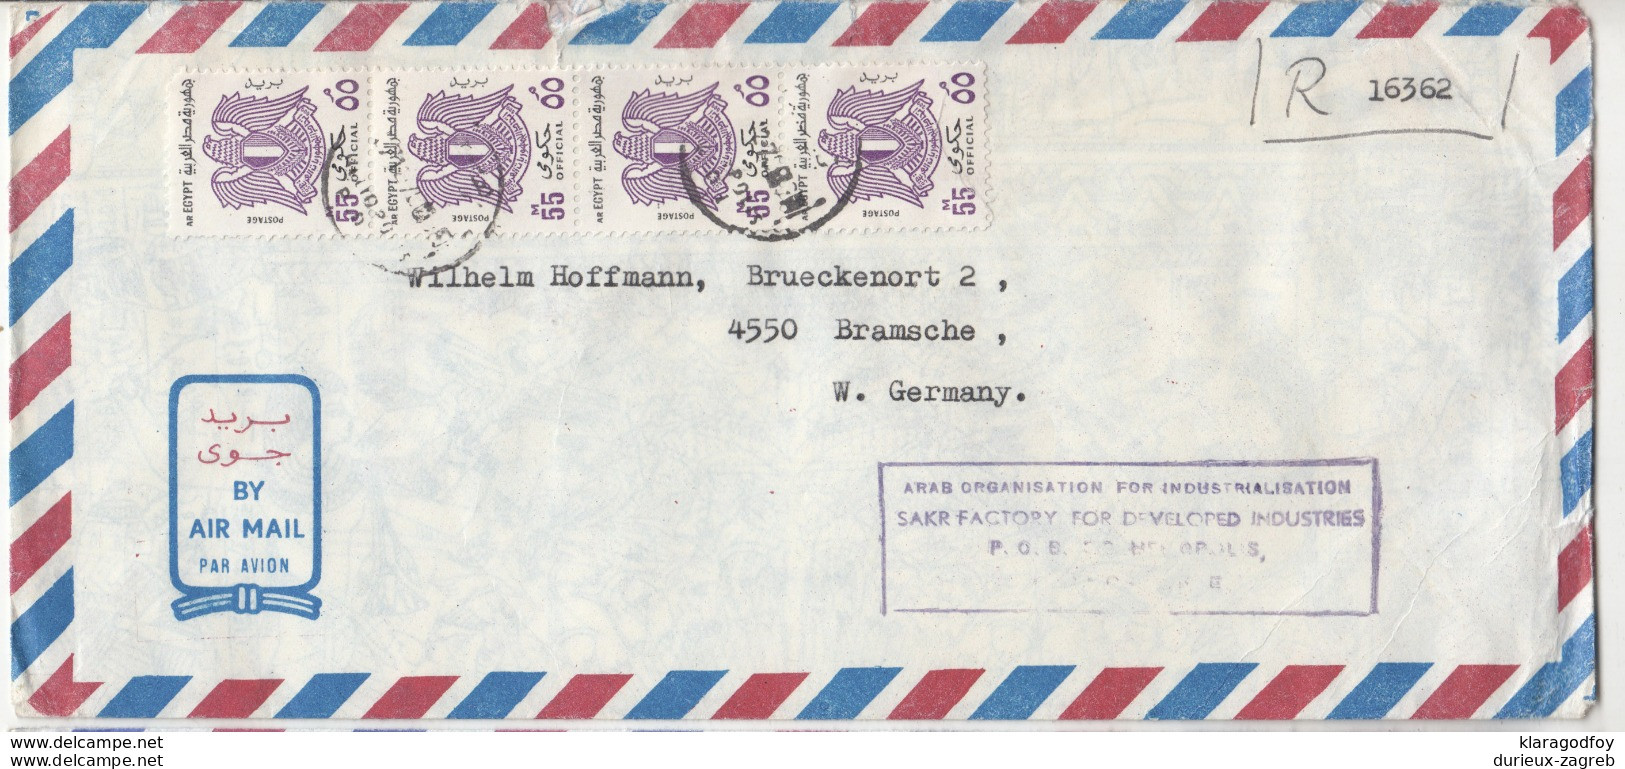 Arab Organisation For Industrialisation Official Air Mail Letter Cover Travelled Registered 19?? To Germany B190922 - Dienstzegels